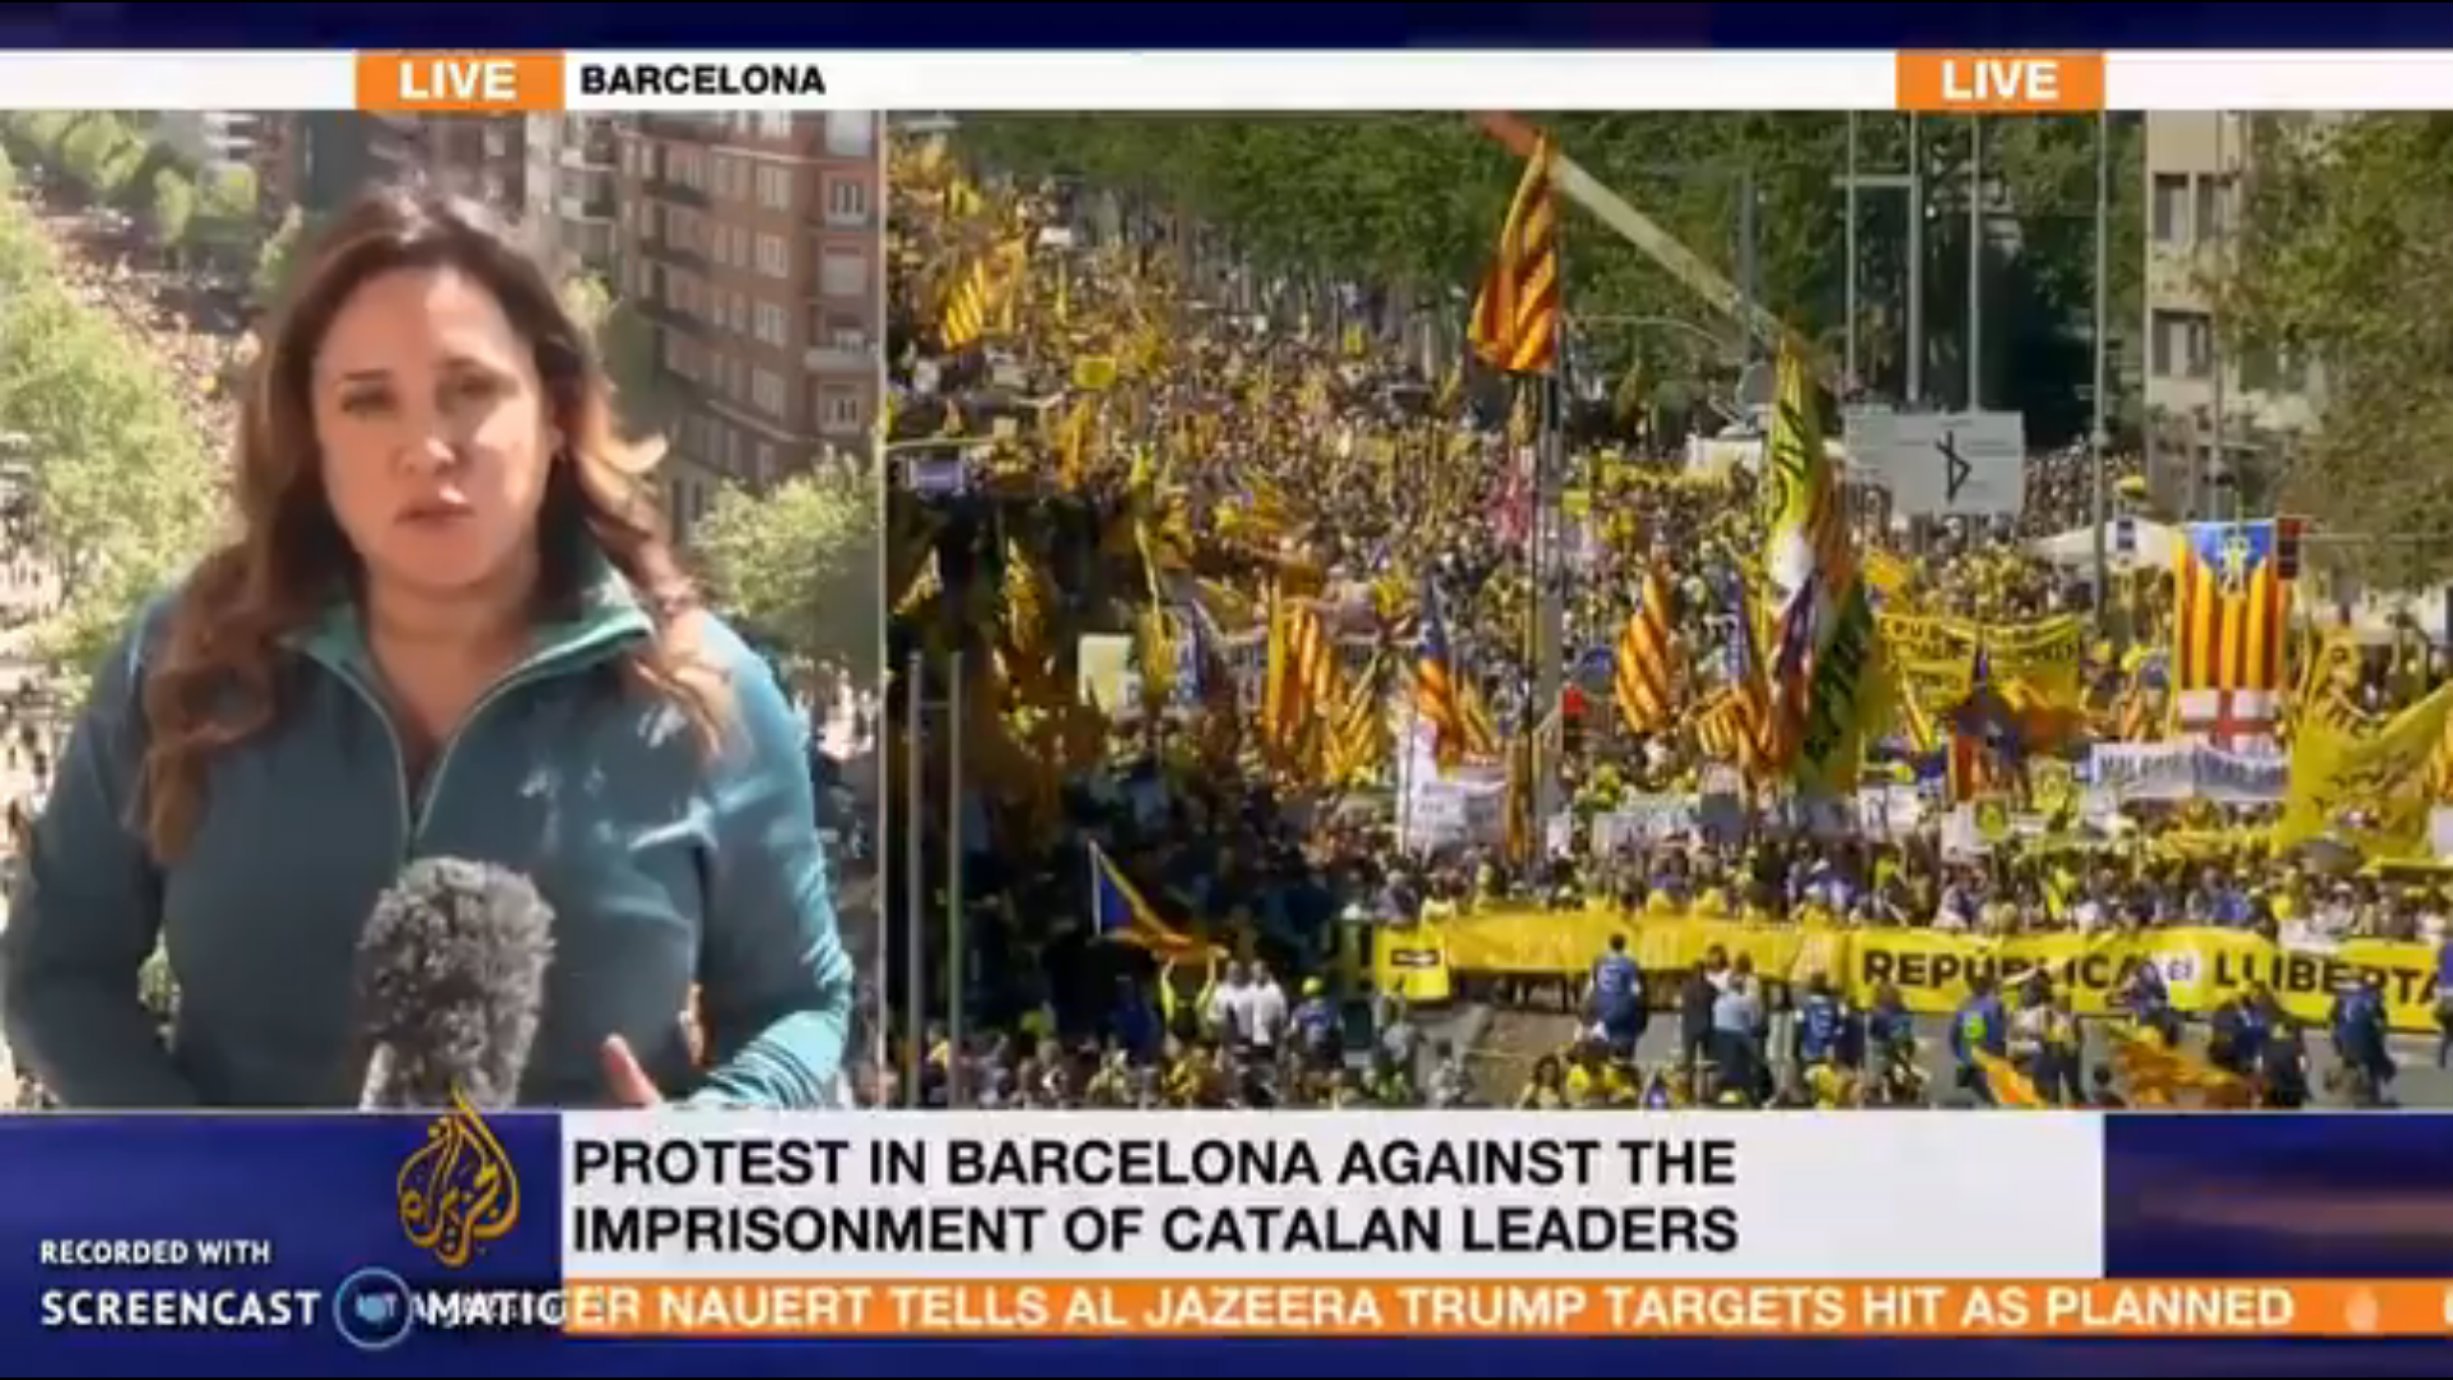 World media highlight huge Barcelona protest for Catalan prisoners